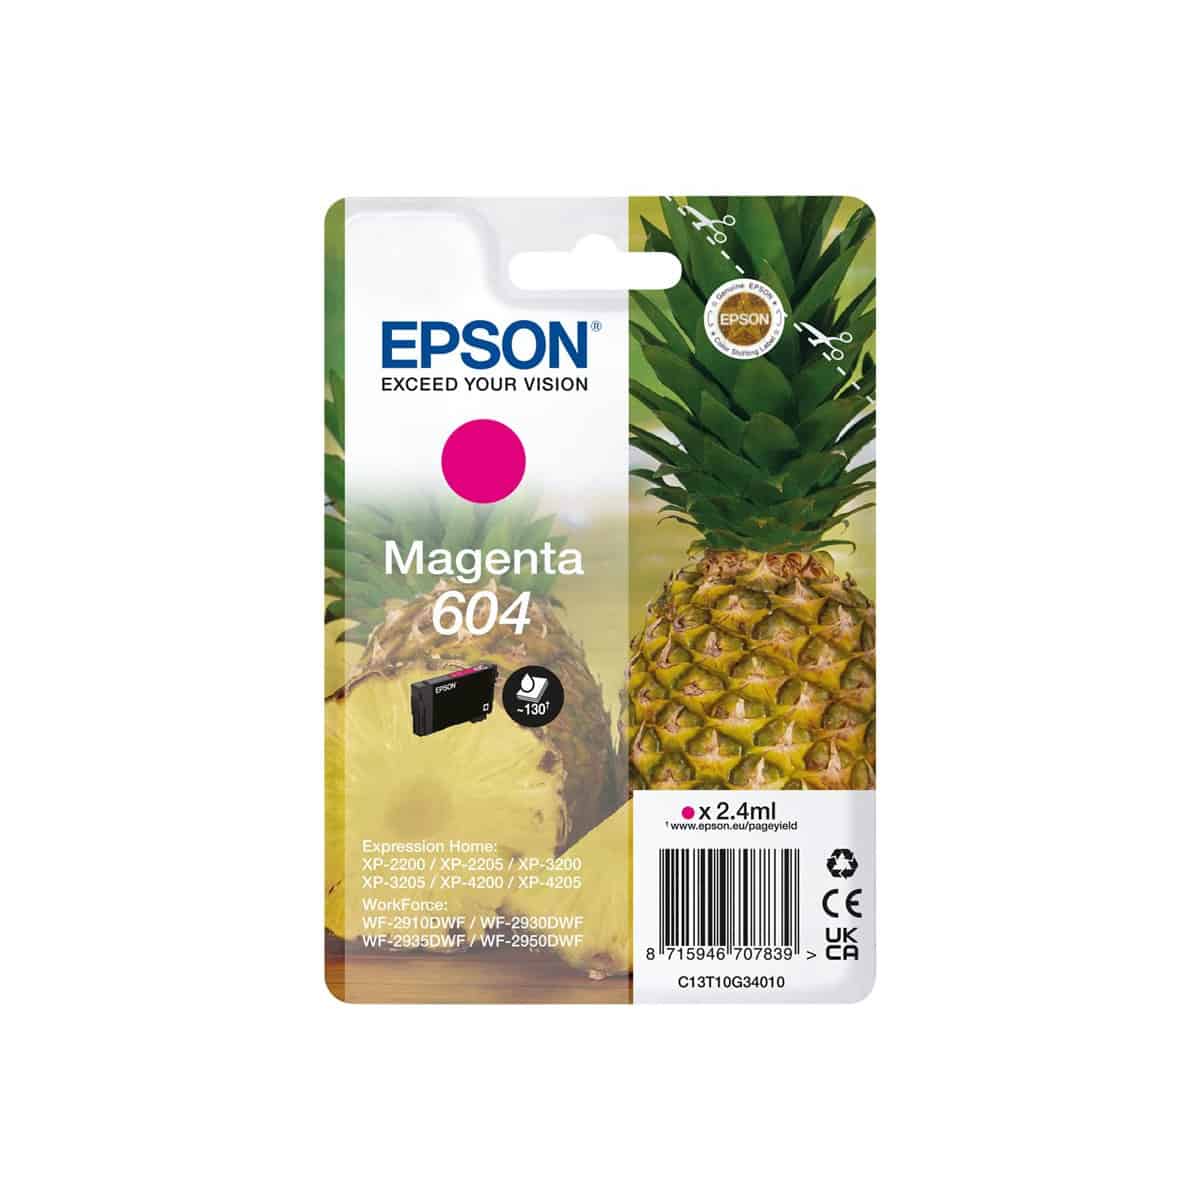 604 M Cartouche Epson C13T10G34010 - Magenta - Ananas